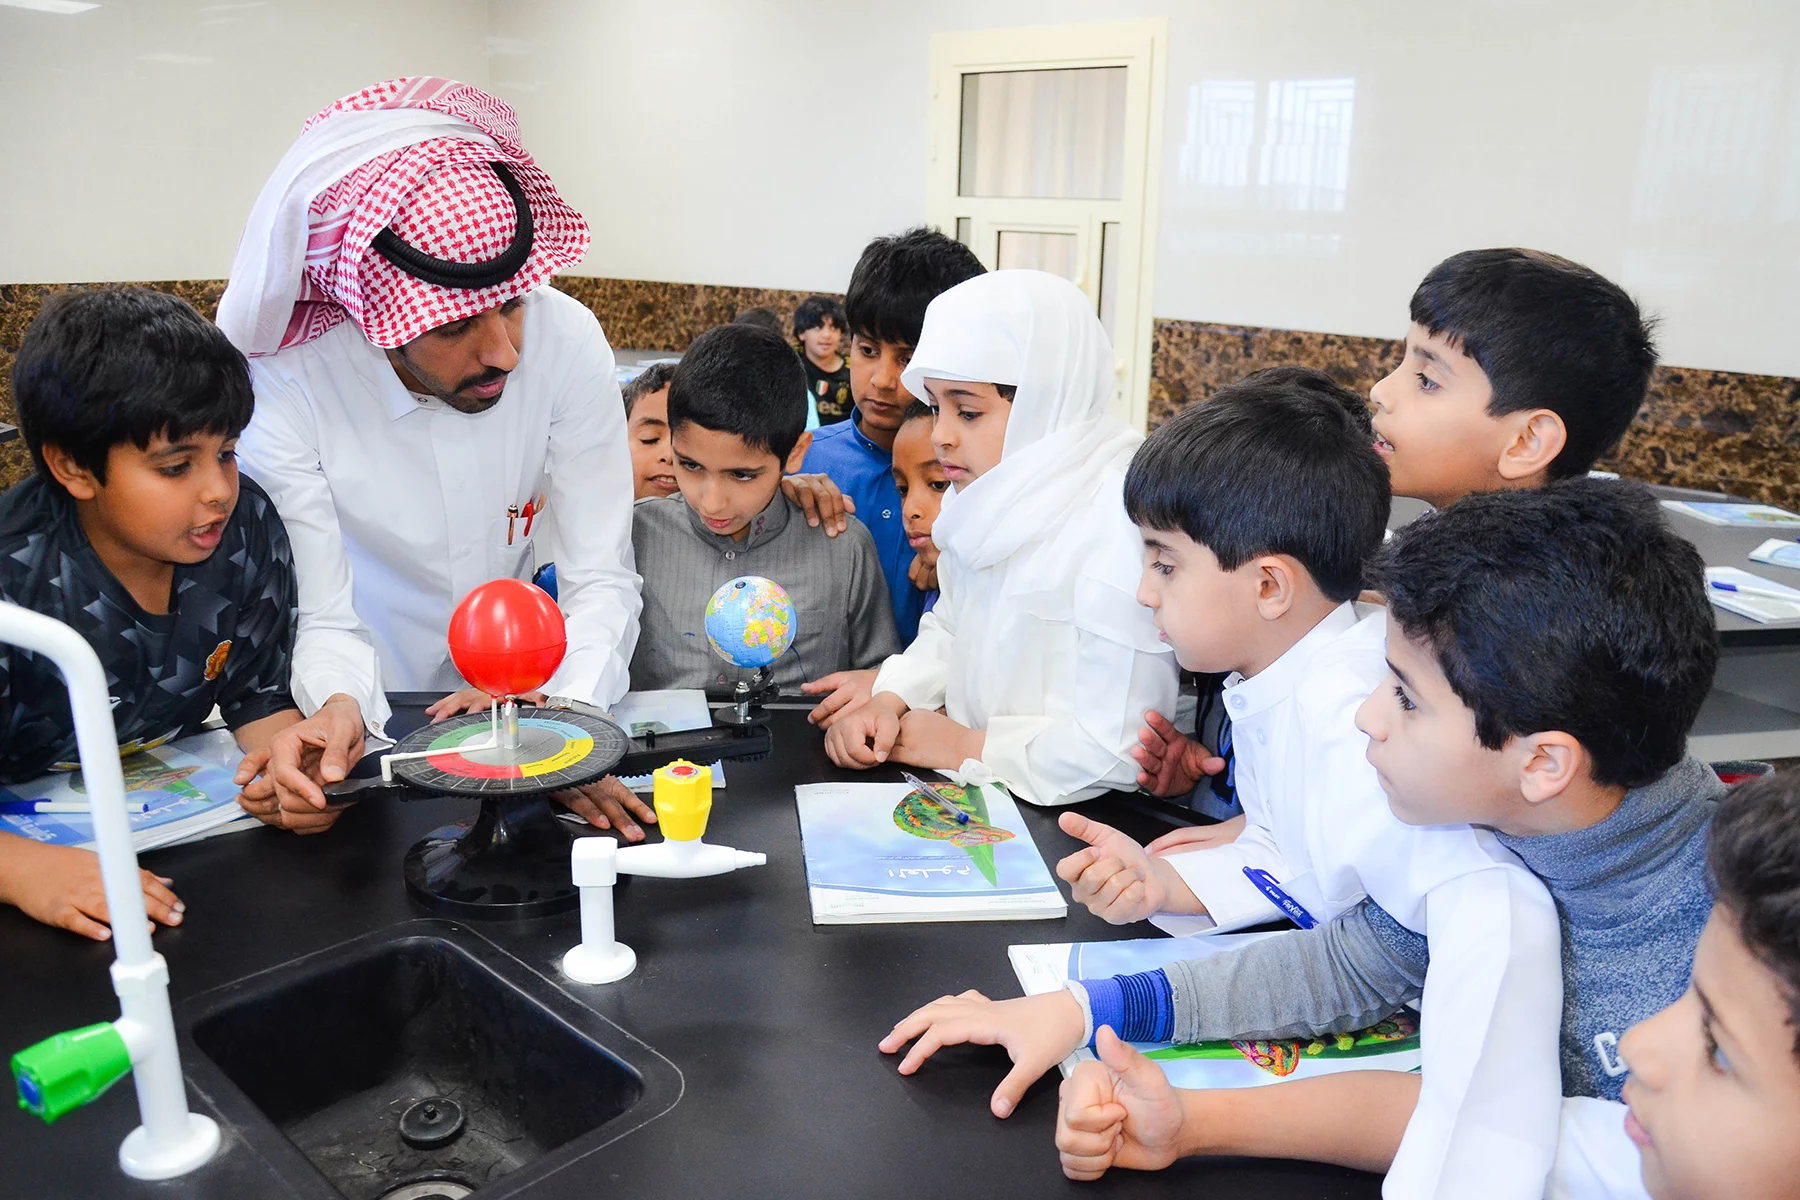 Science students at a school in Saudi Arabia